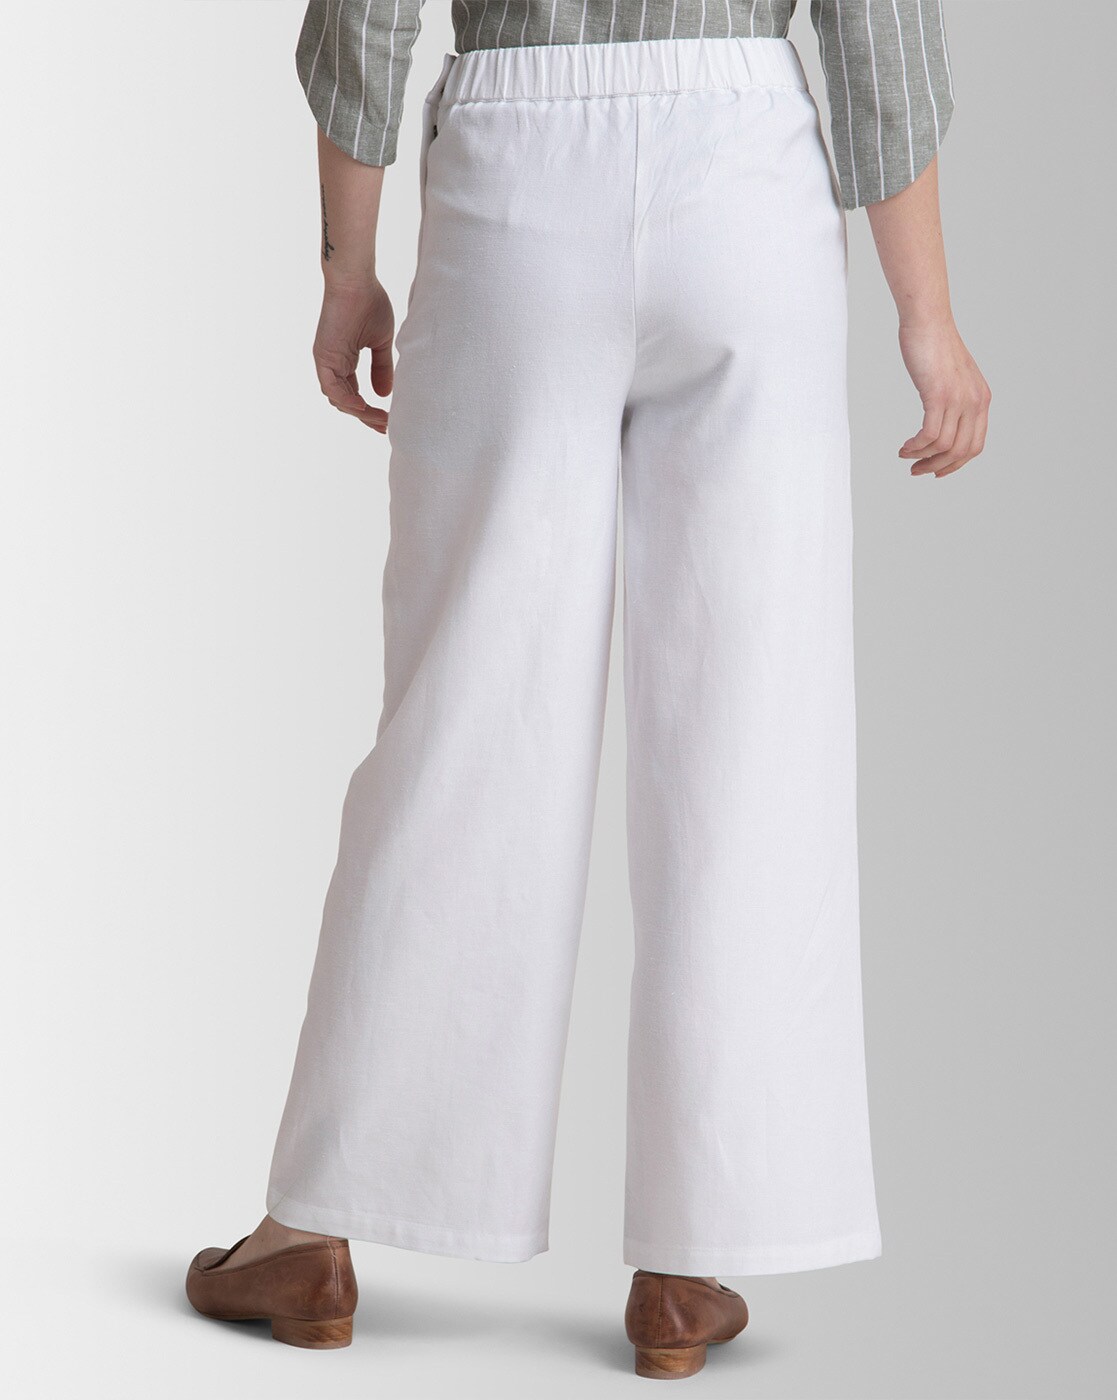 Buy White Pants Online in India at Best Price - Westside